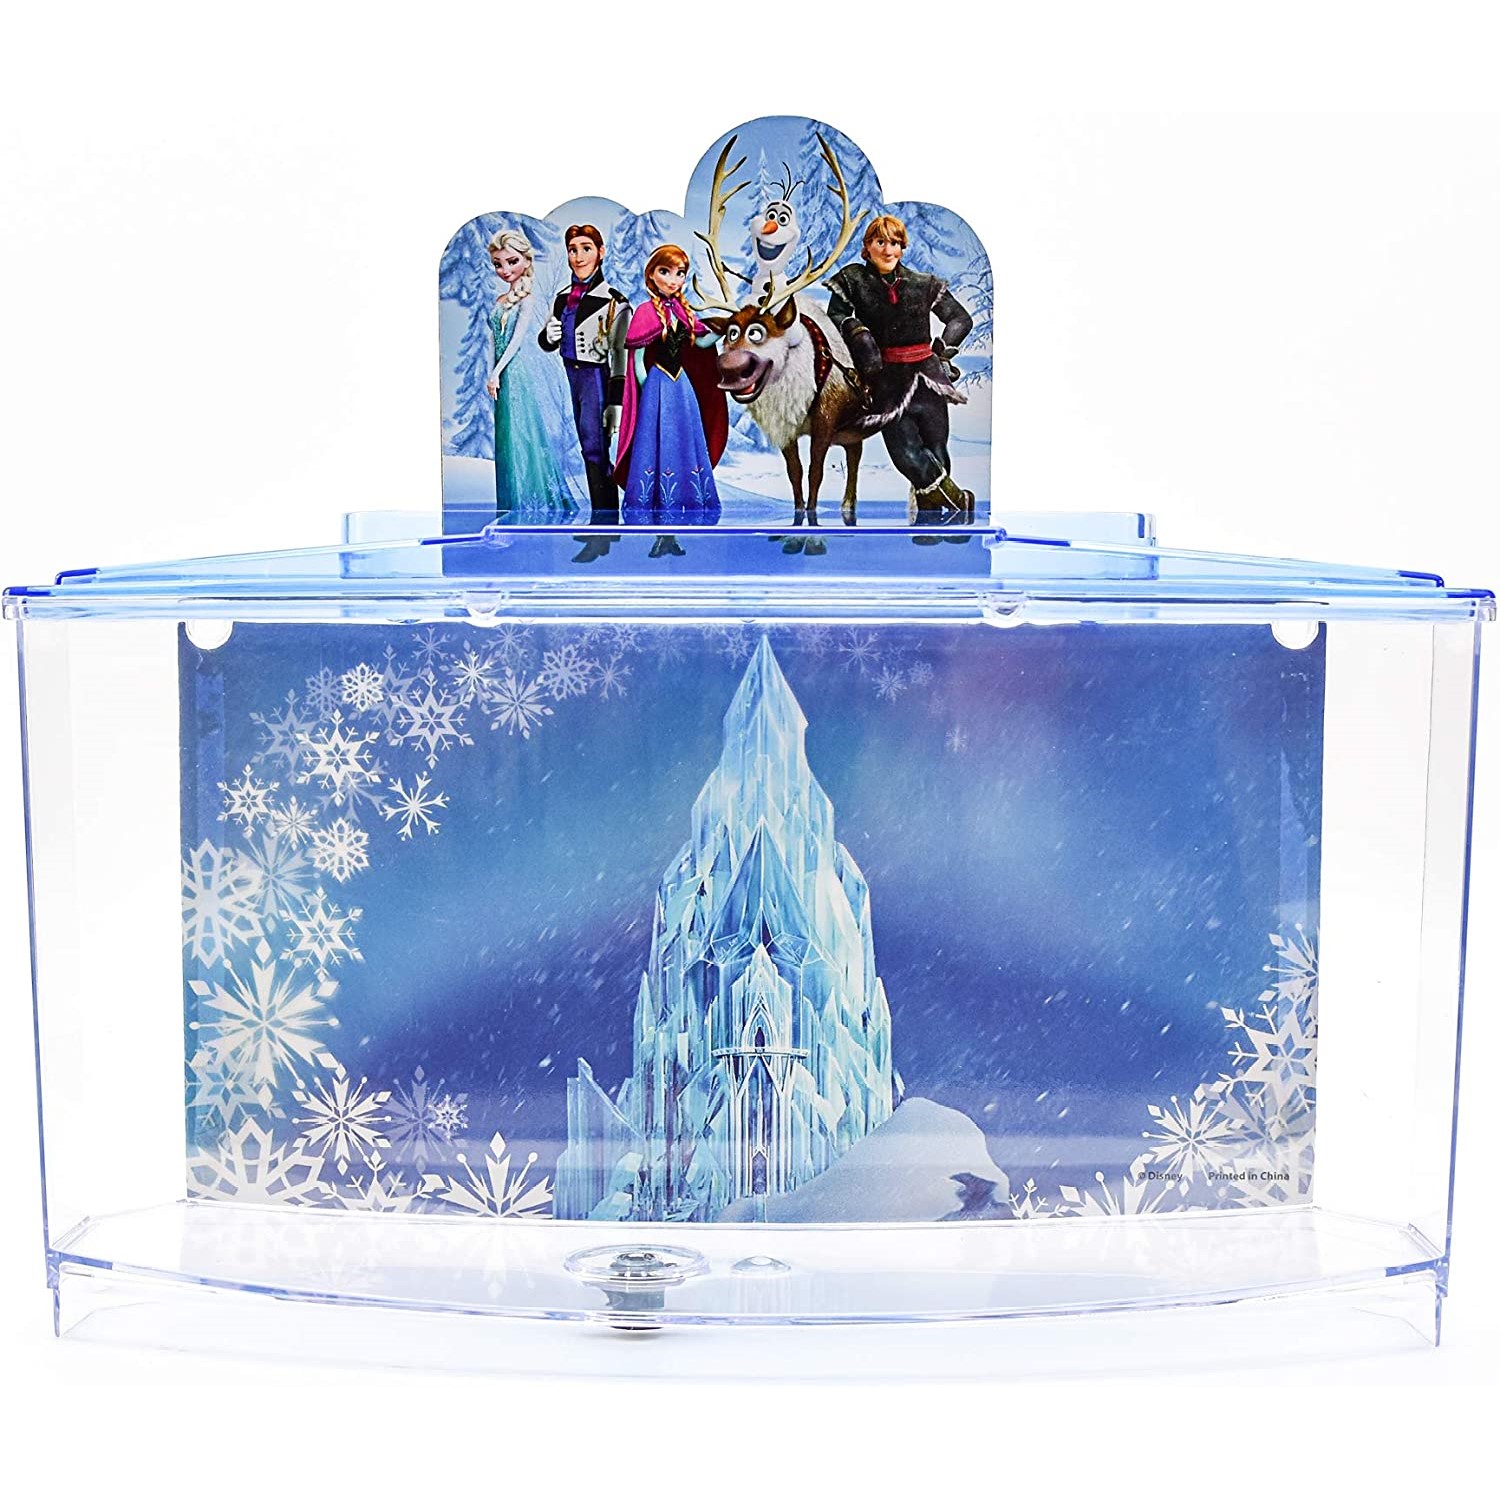 Aqua kit Frozen barneakvarium ca. 17ltr